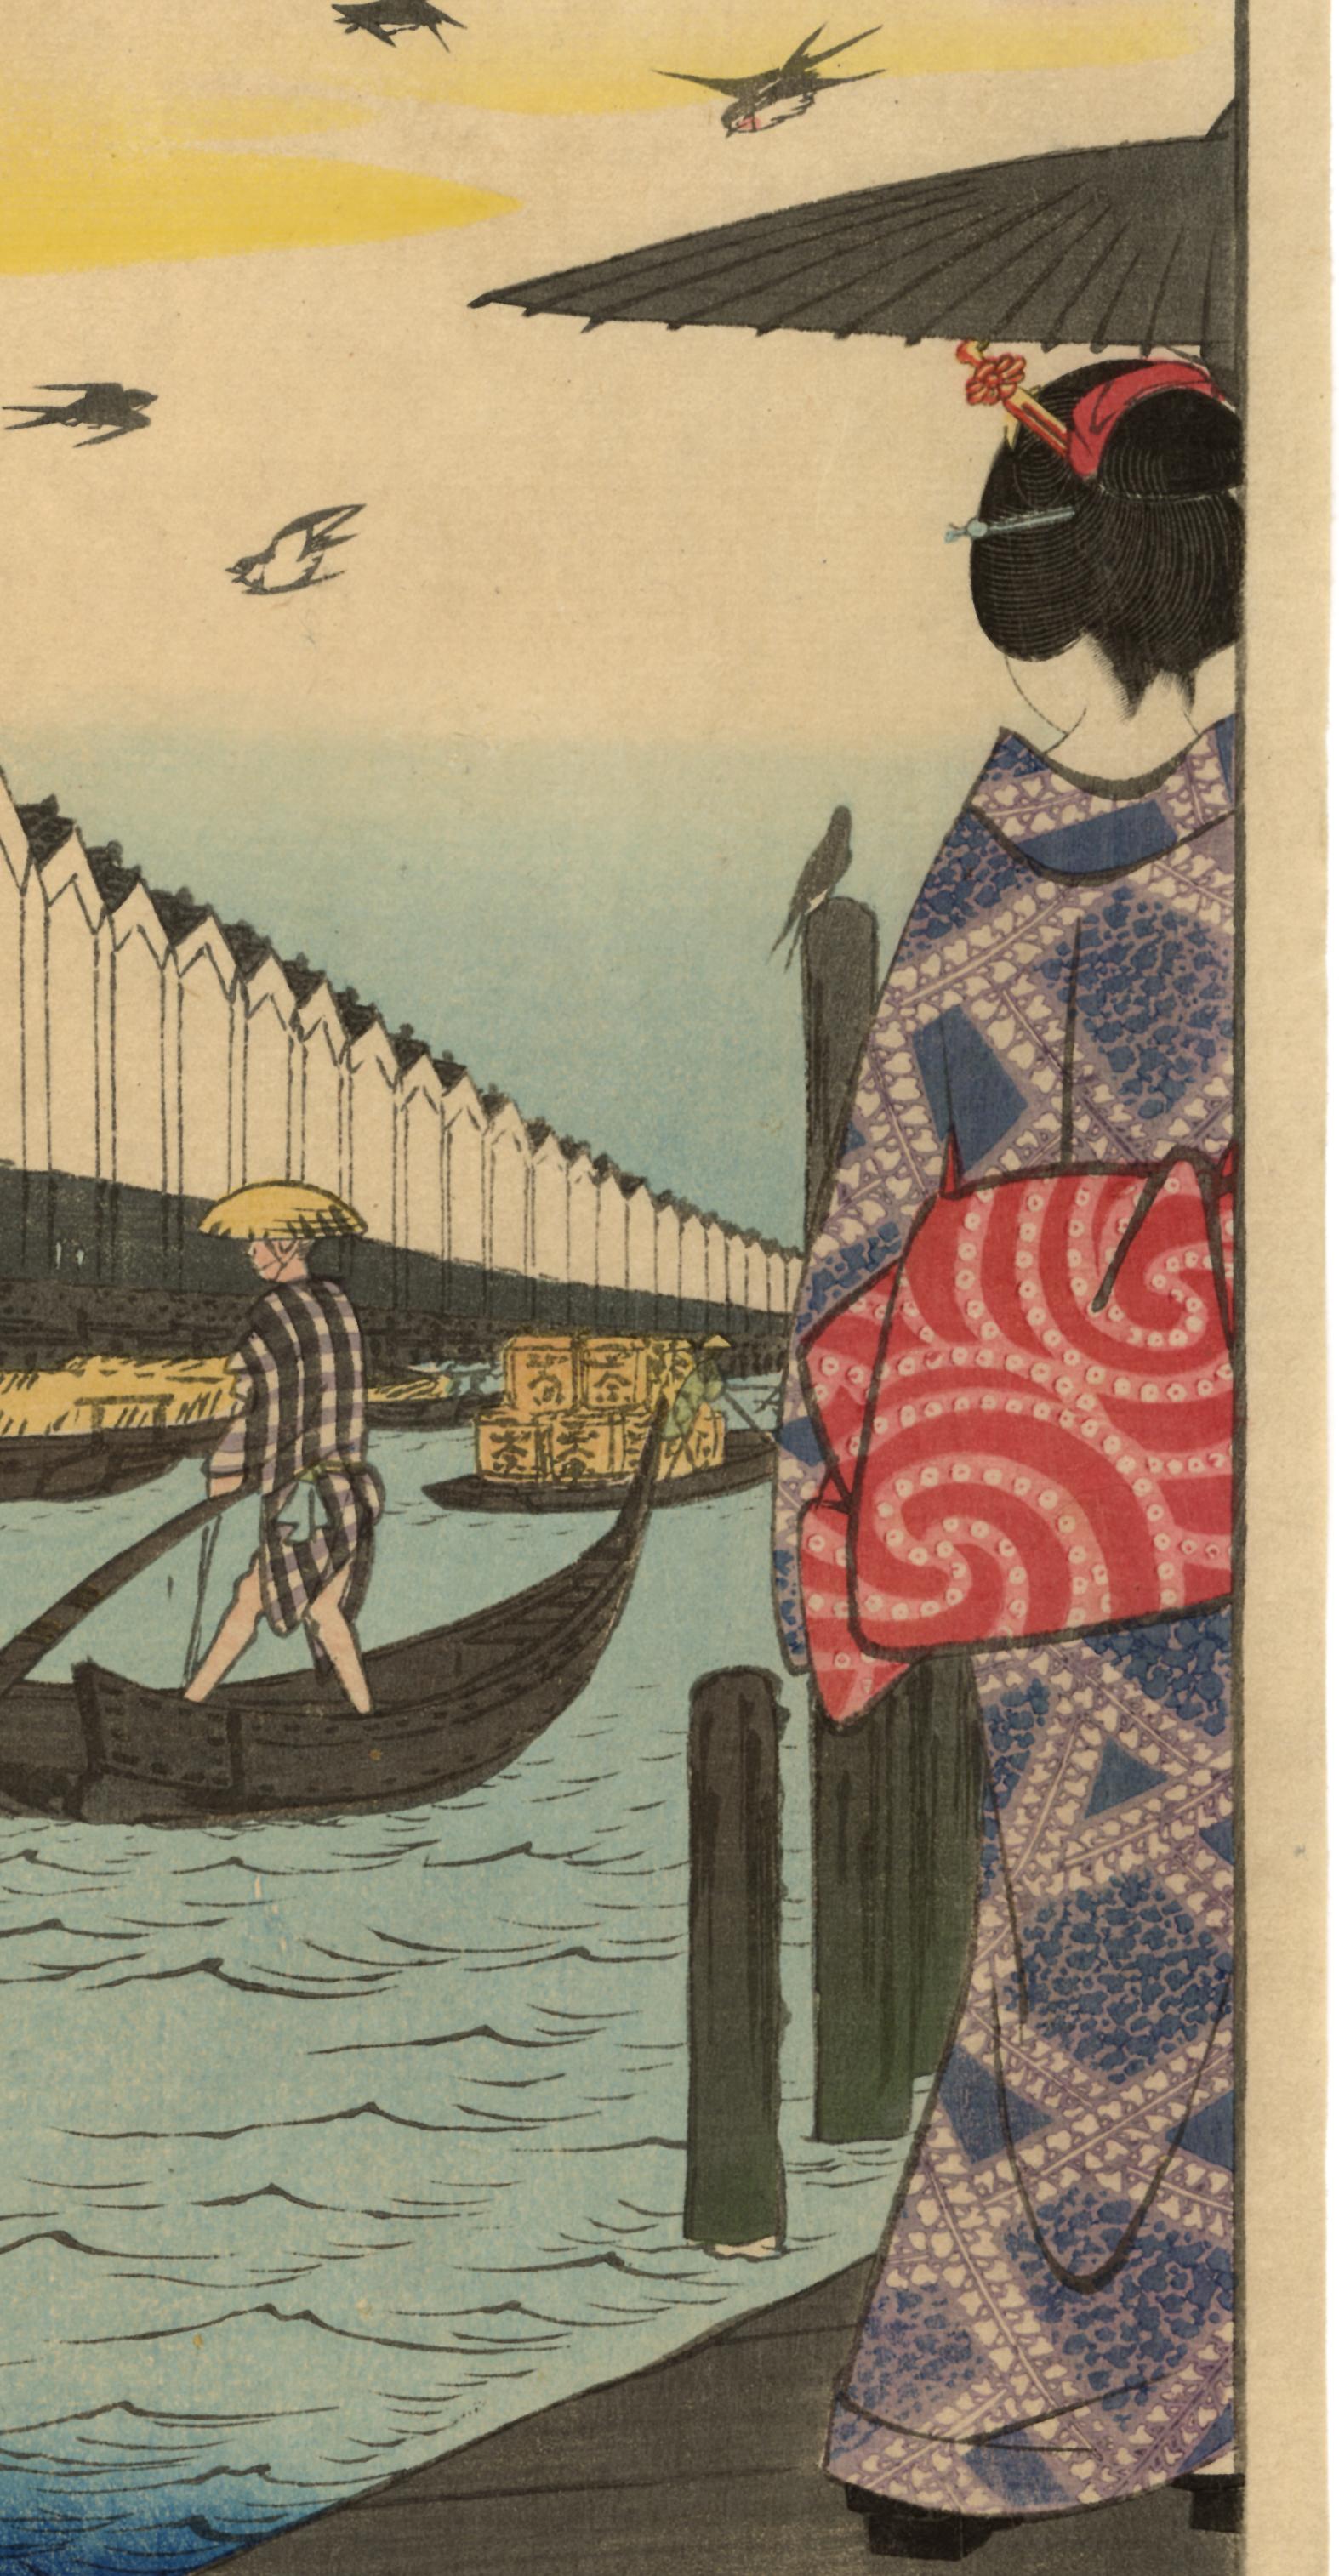 Yoroi Ferry from 100 Famous Views of Edo - Print by Utagawa Hiroshige (Ando Hiroshige)